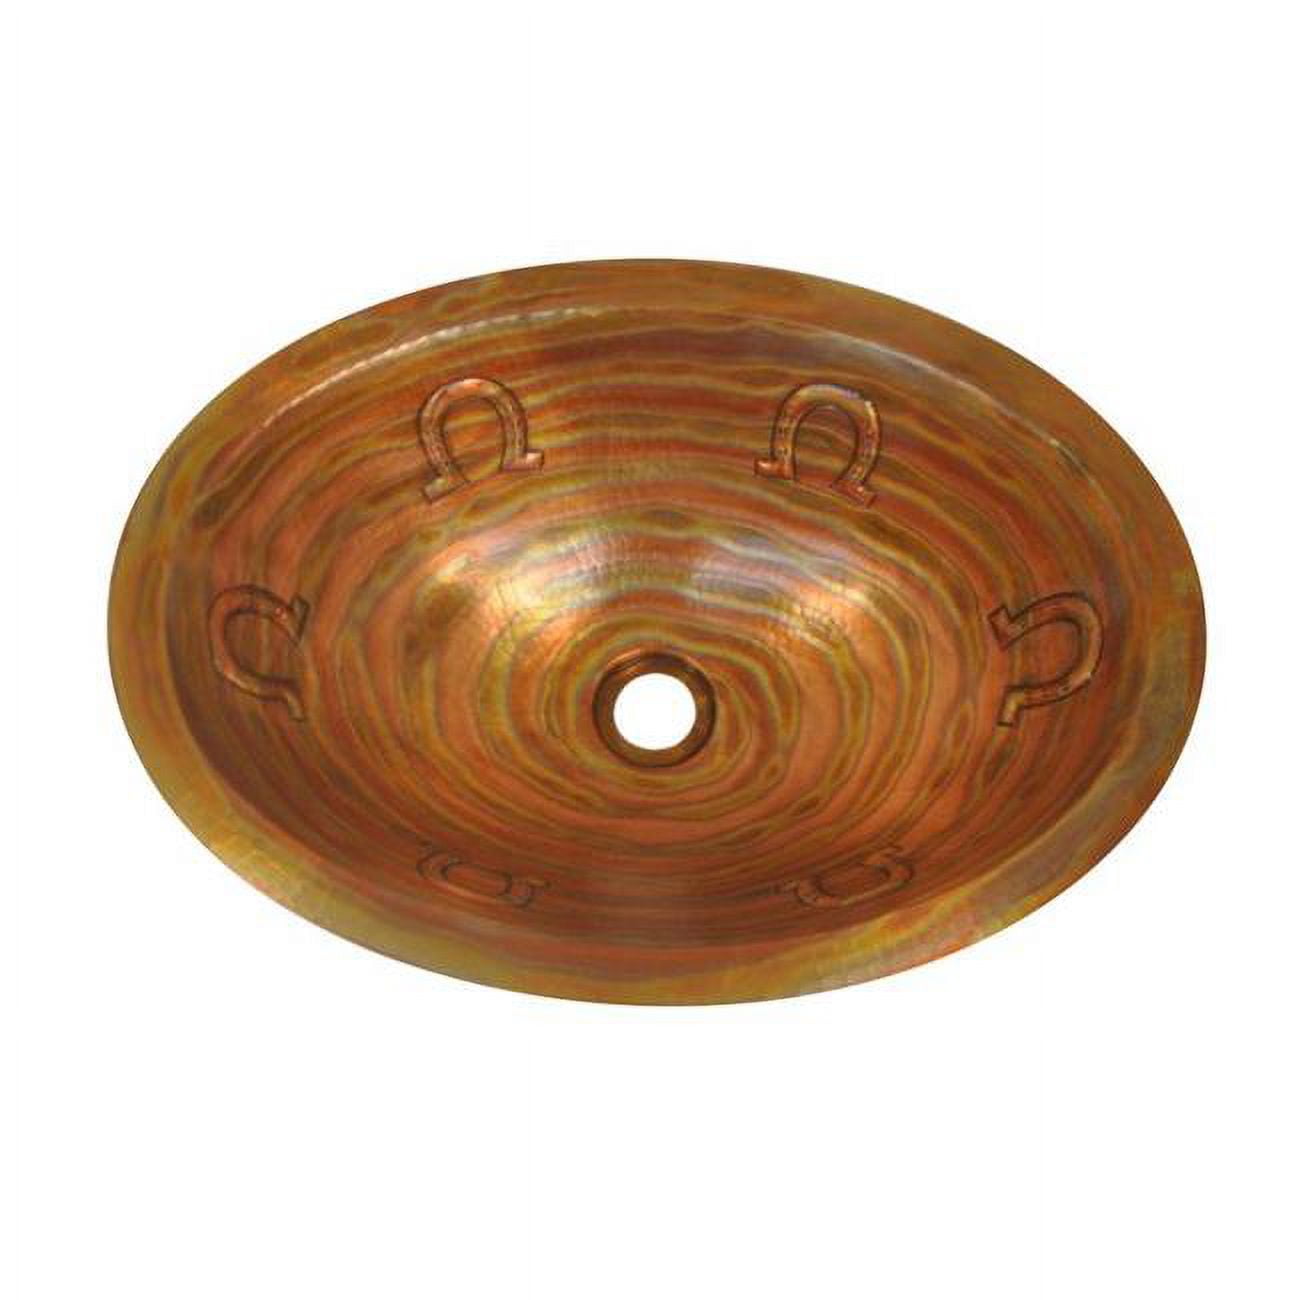 Cos-hs-19-rl-dl Copper Oval Bath Sink, Dark Light - Horseshoe Design - 6 X 14 X 19 In.